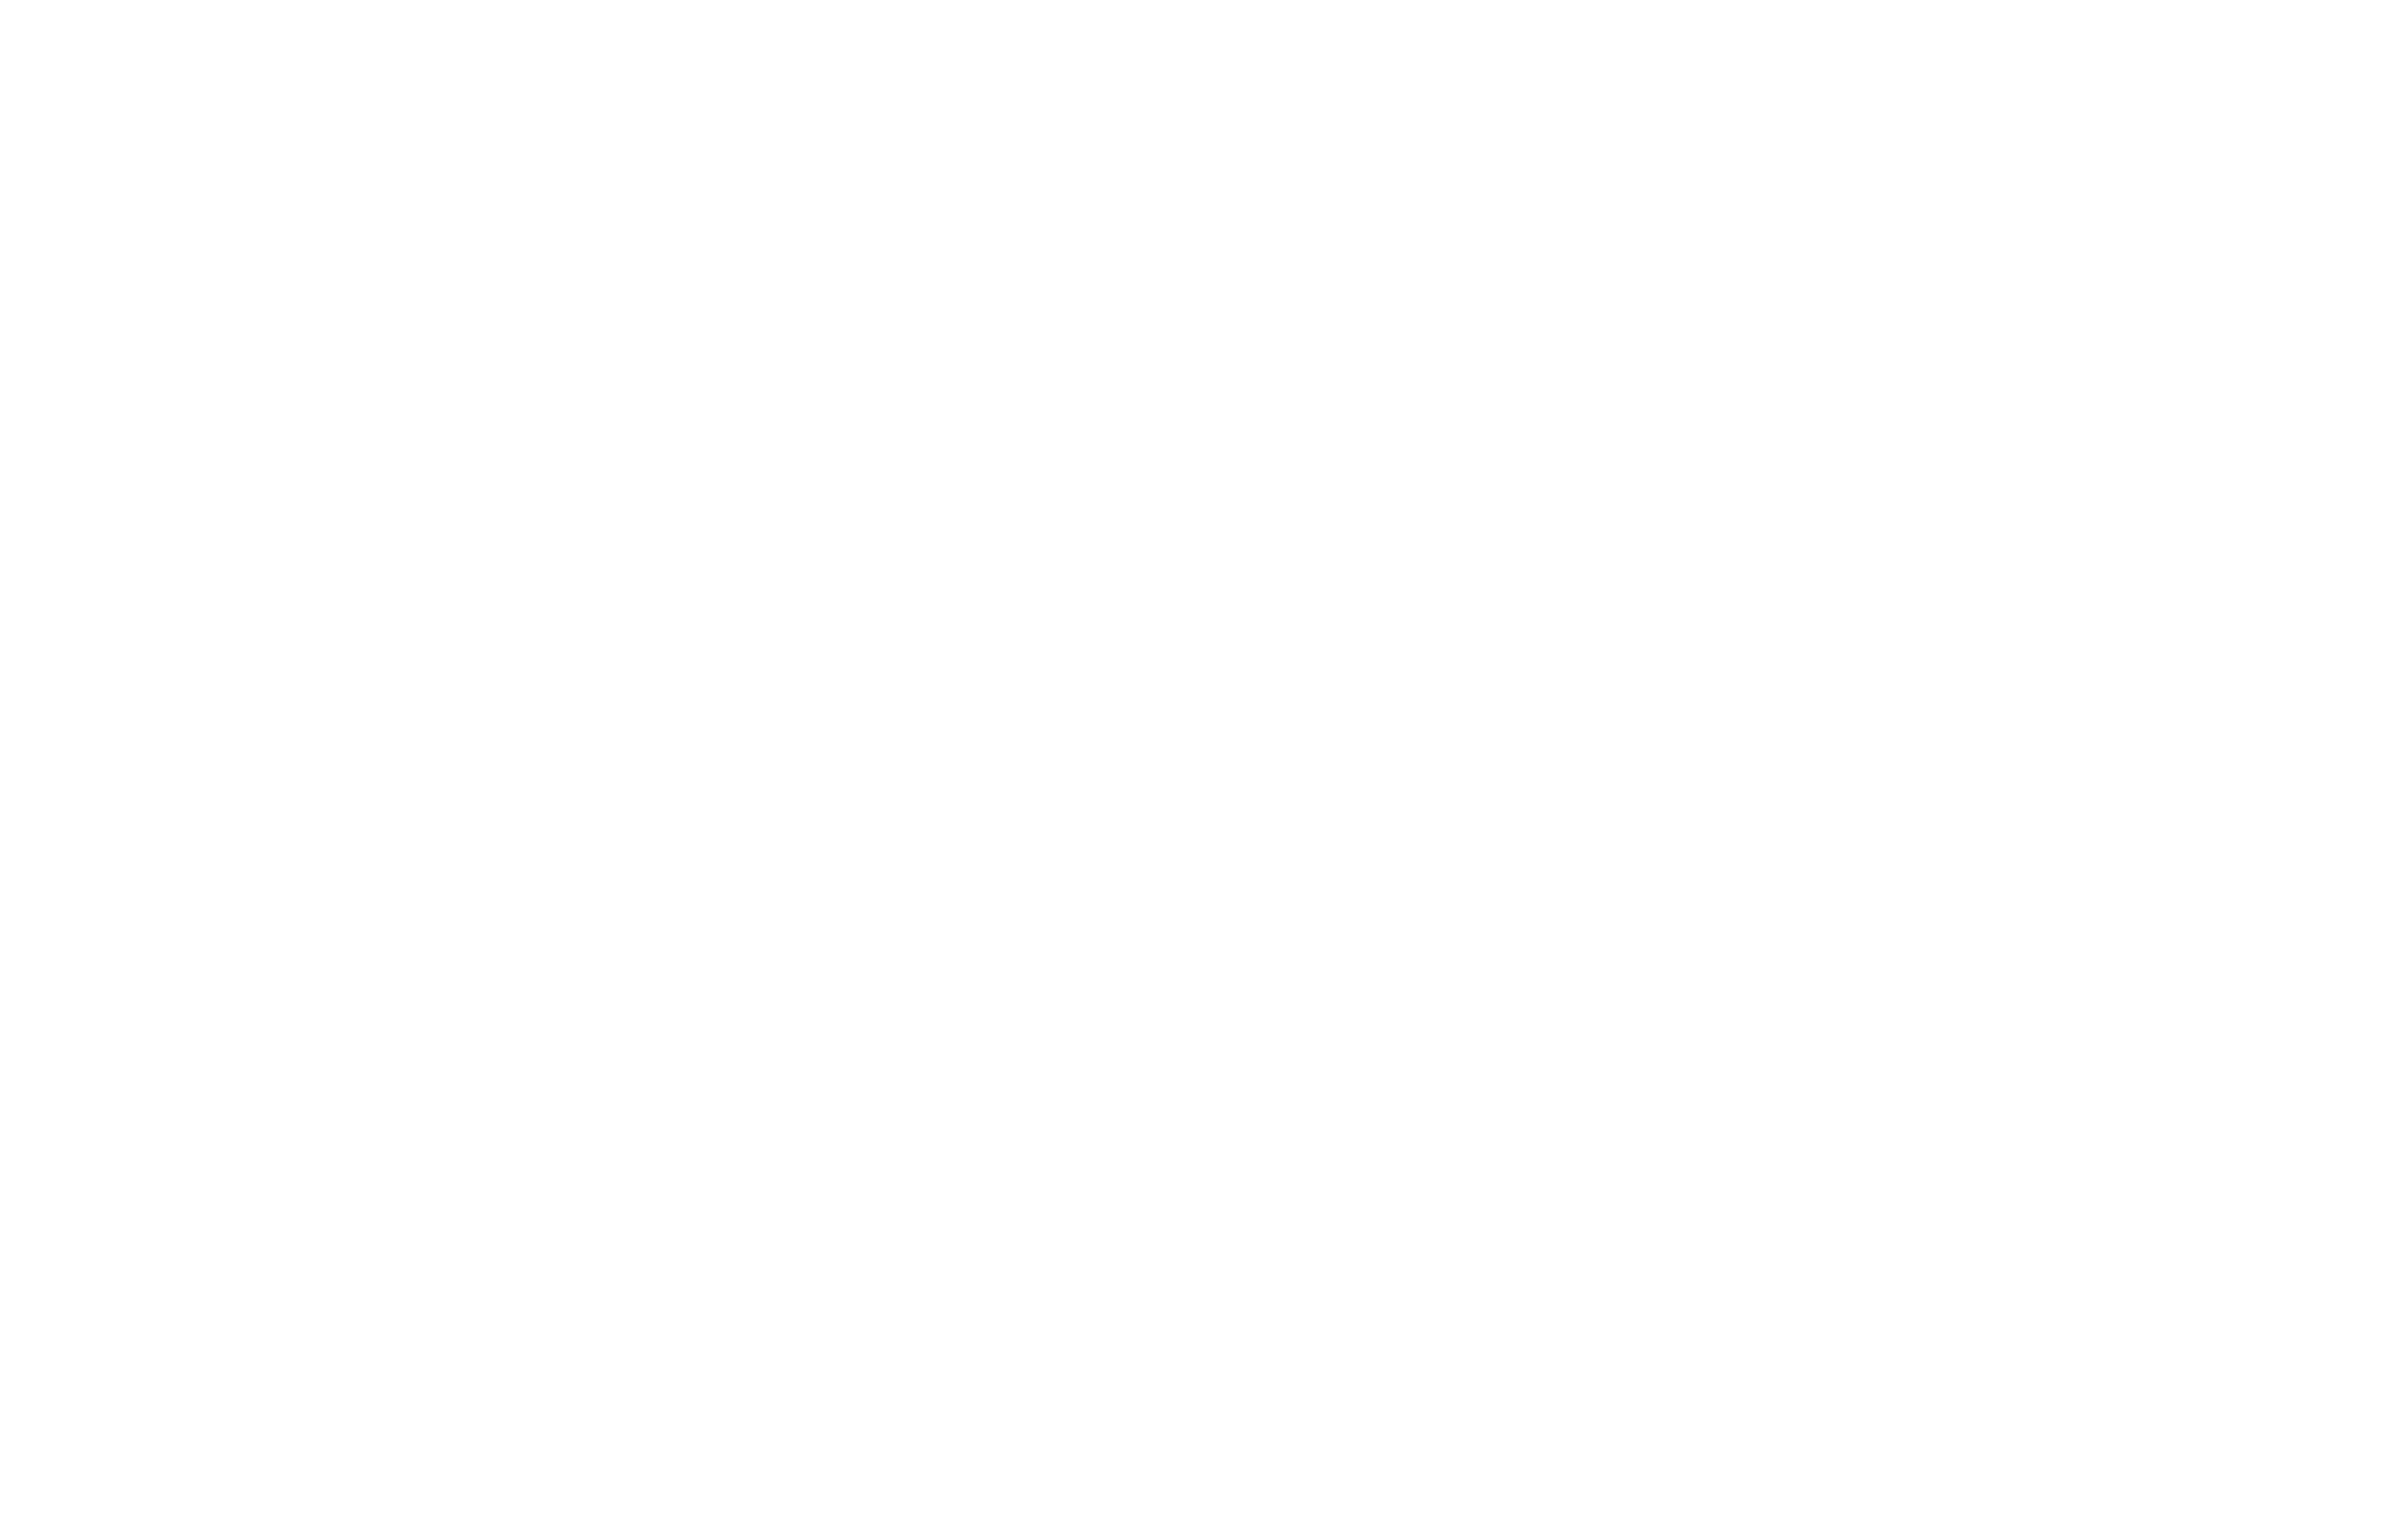 Portside Marketing, LLC